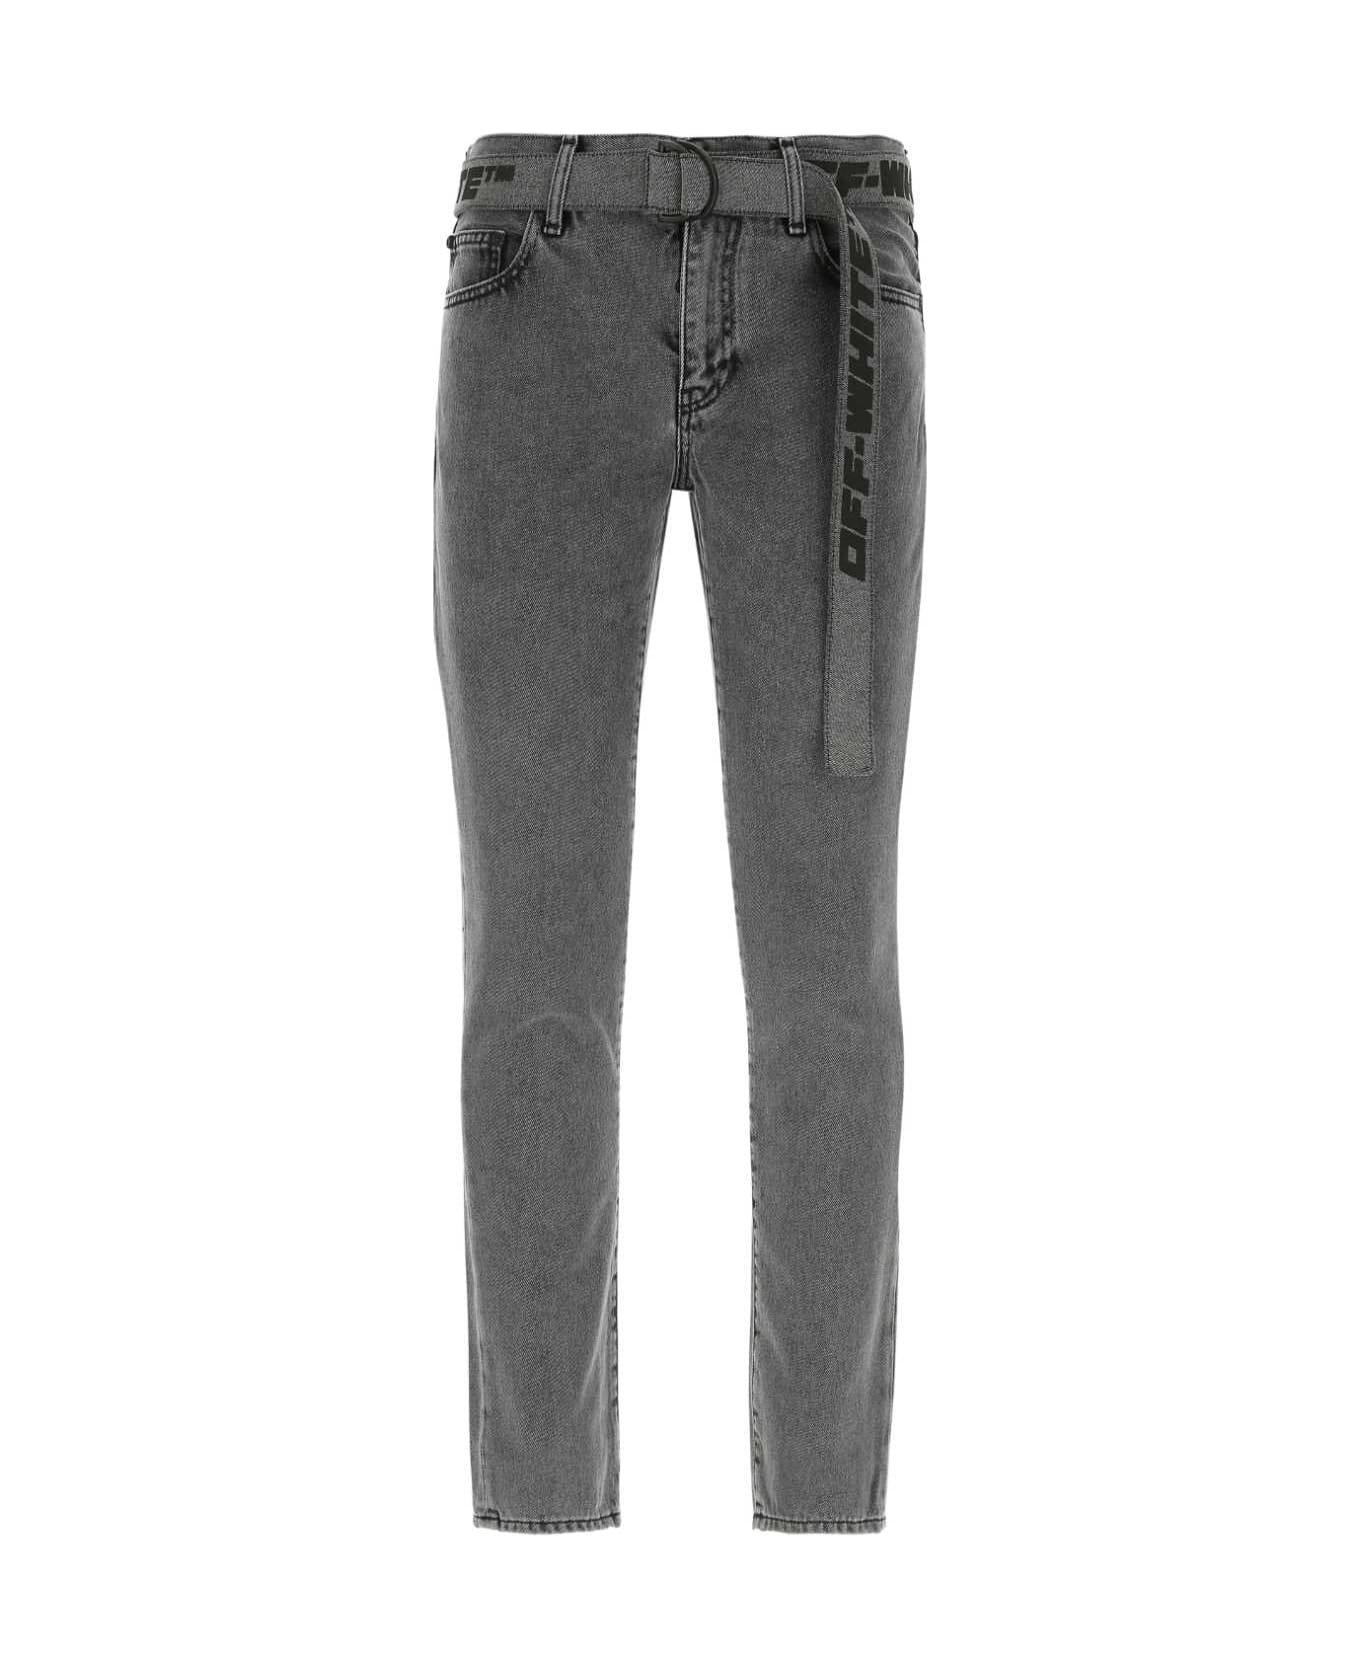 Off-White Black Denim Jeans - 1210